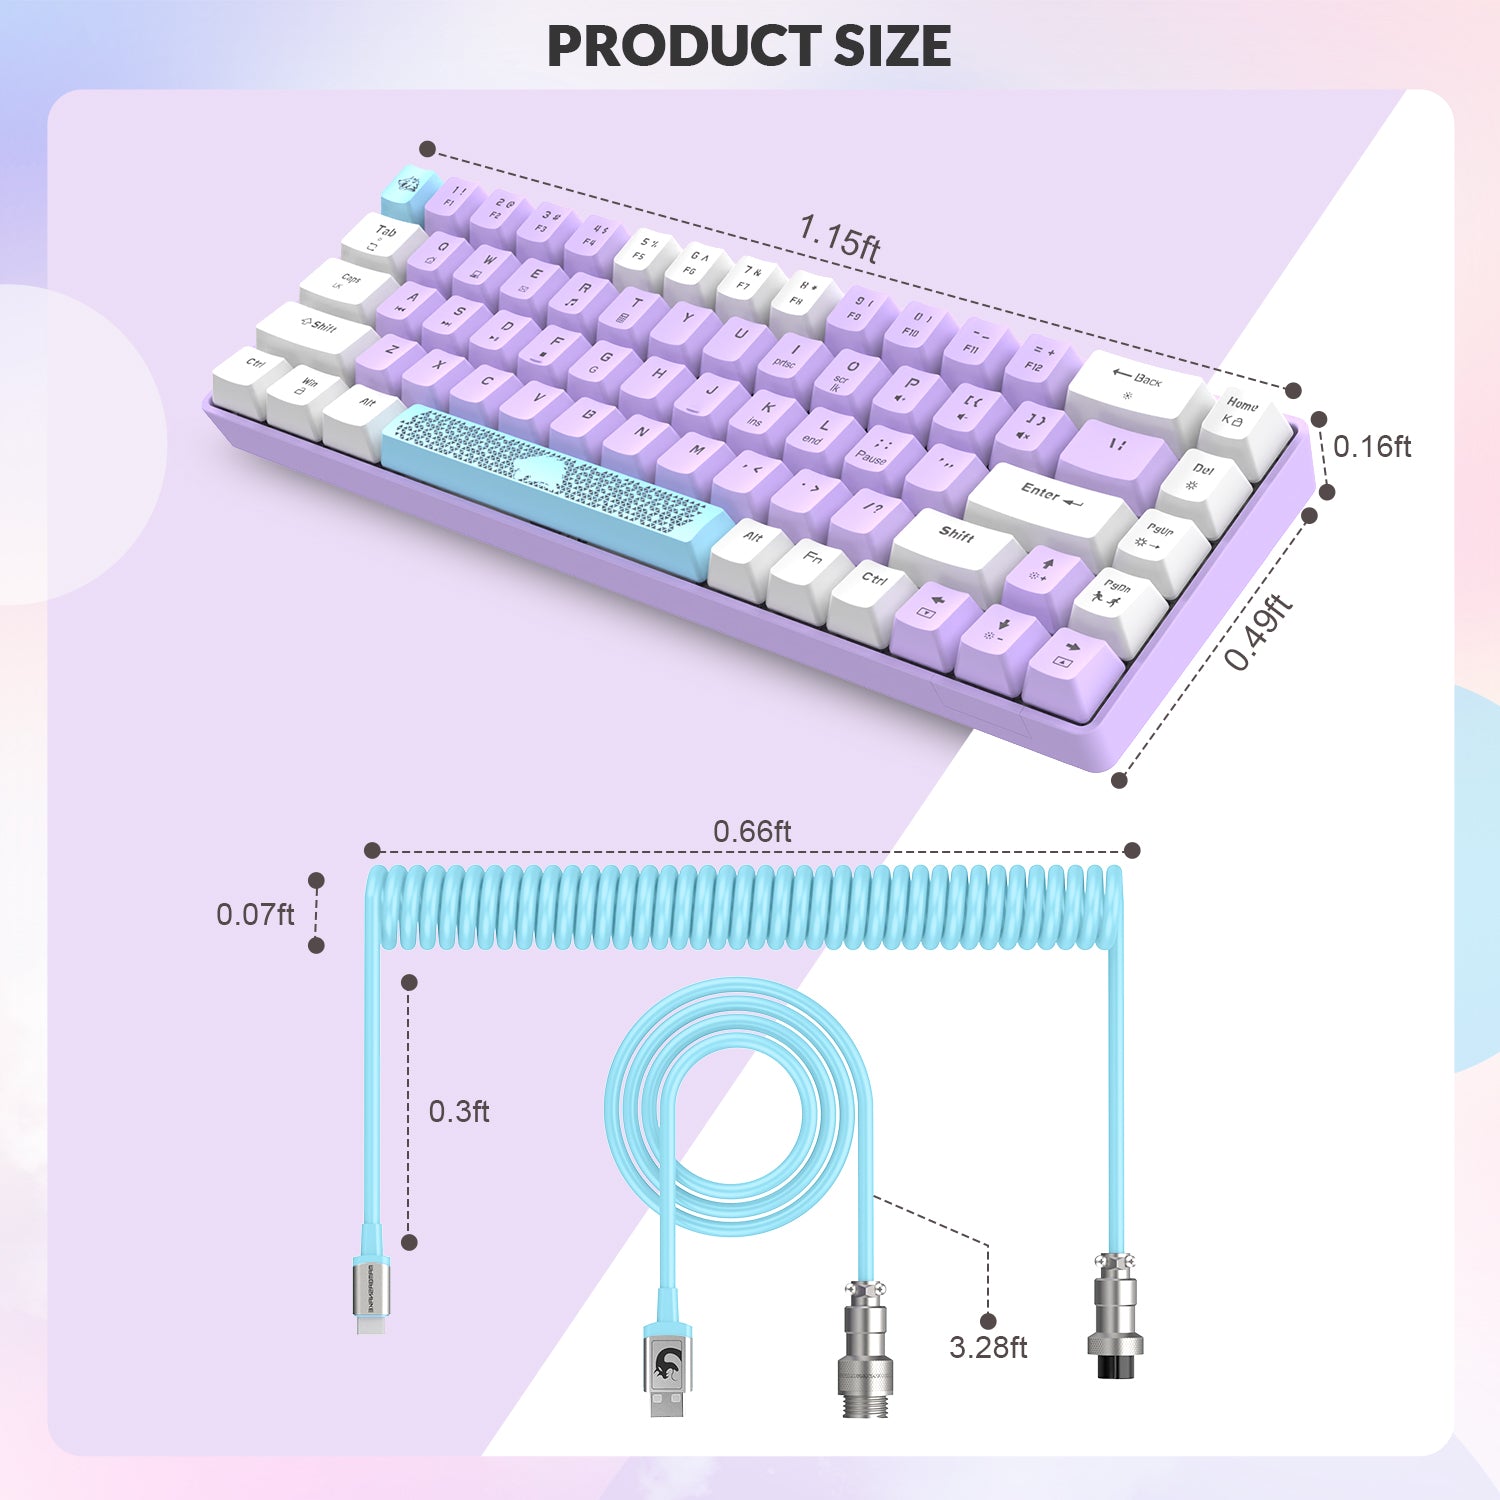 SnowCone 60% Keyboard